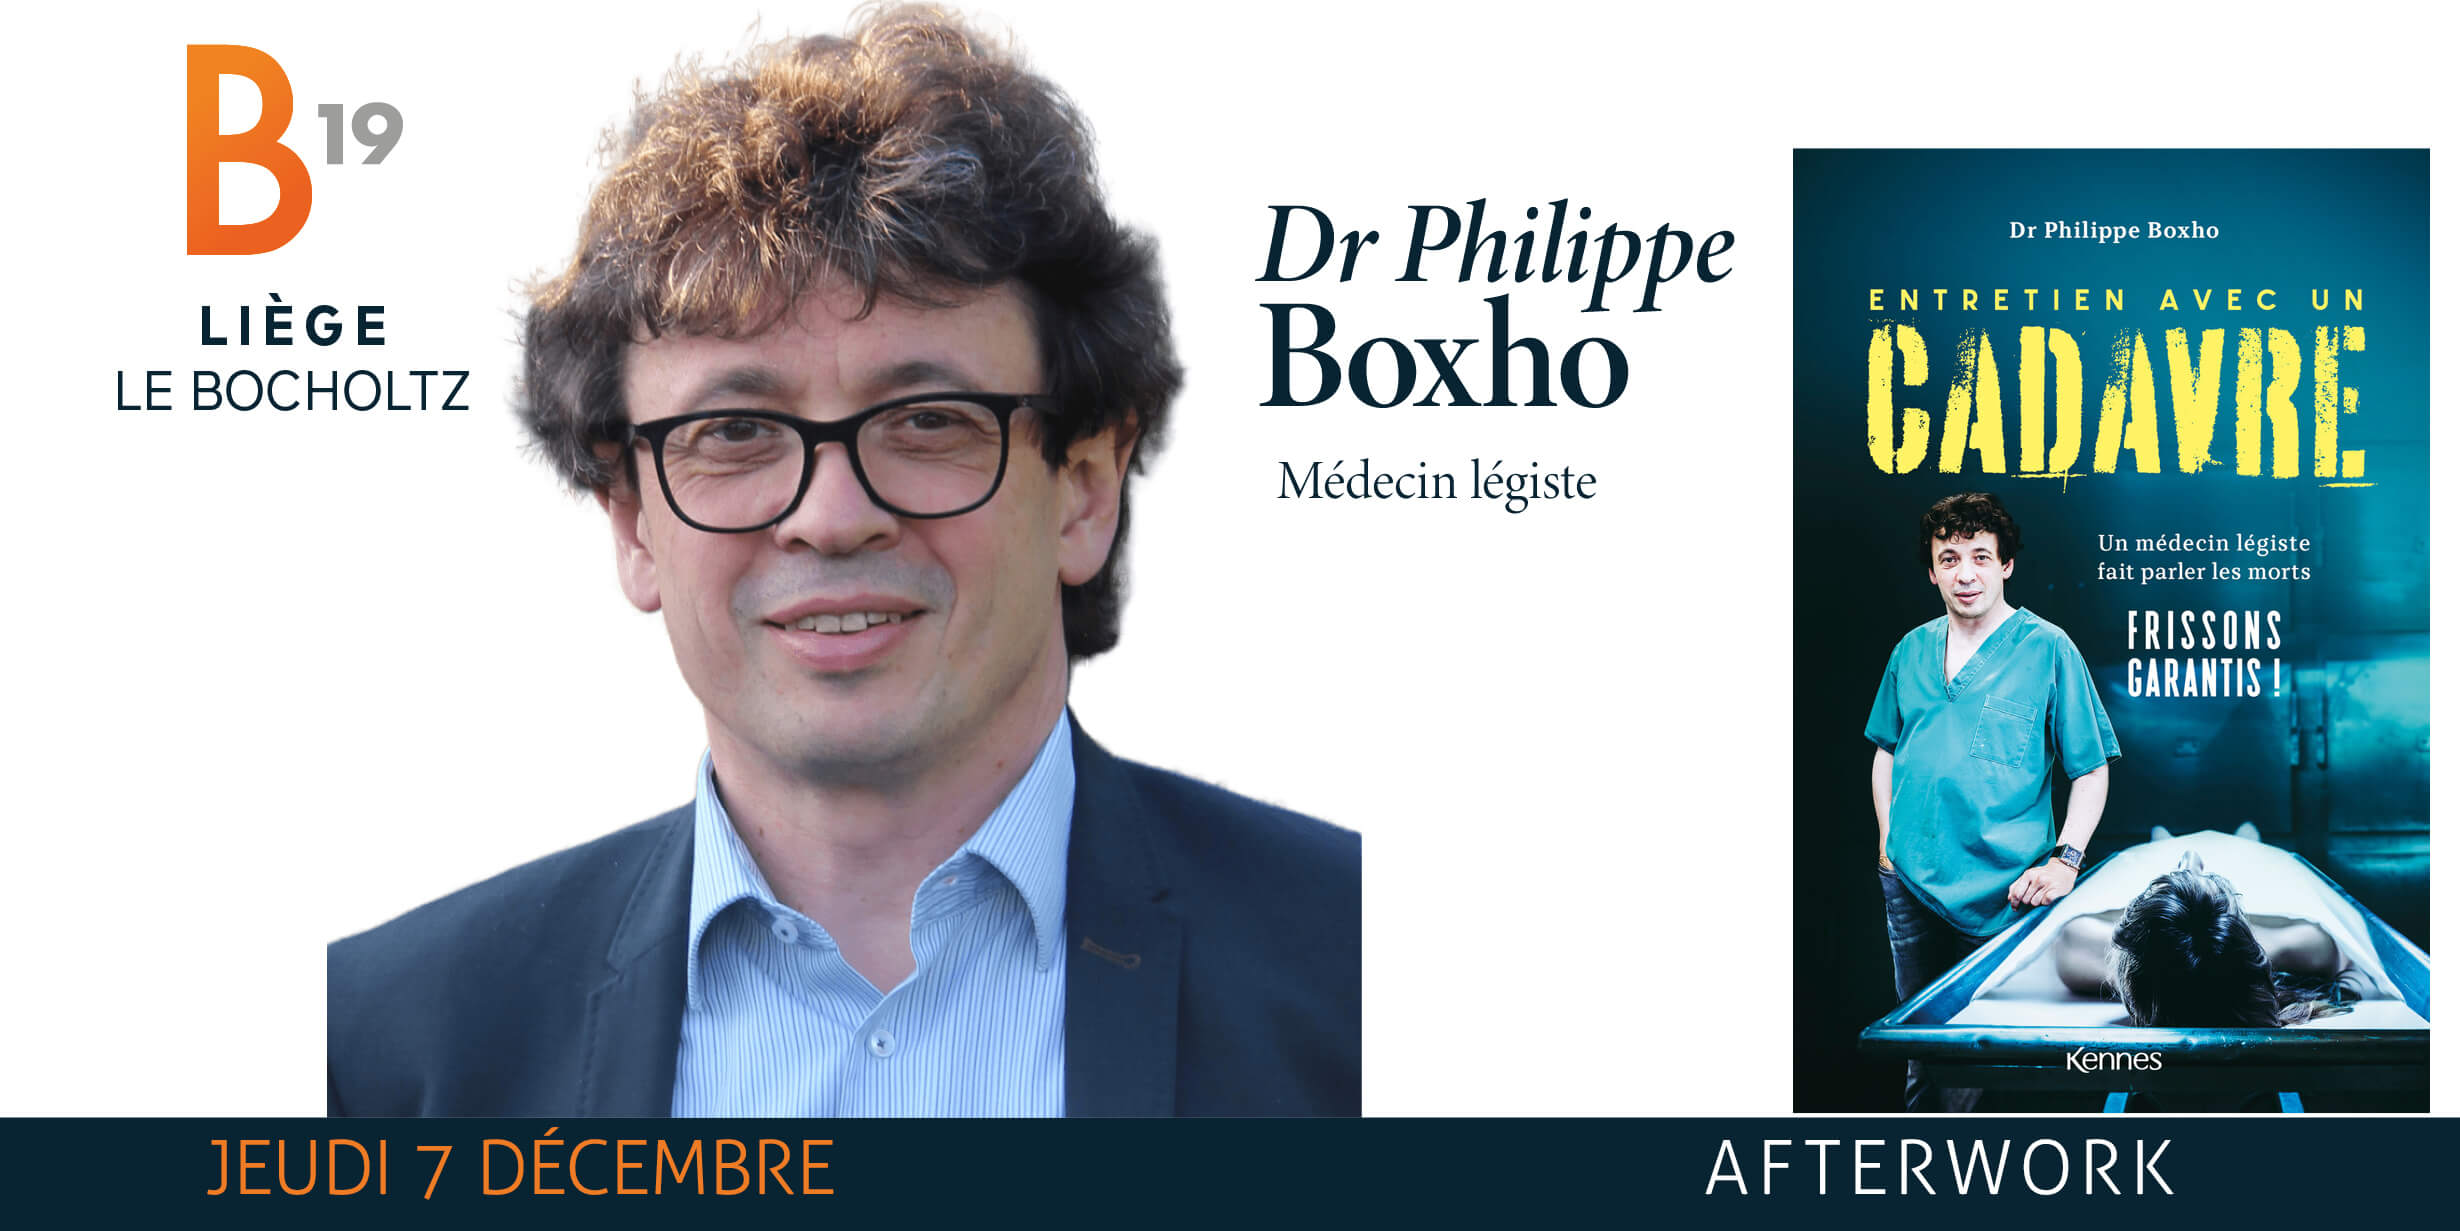 Philippe Boxho, médecin légiste